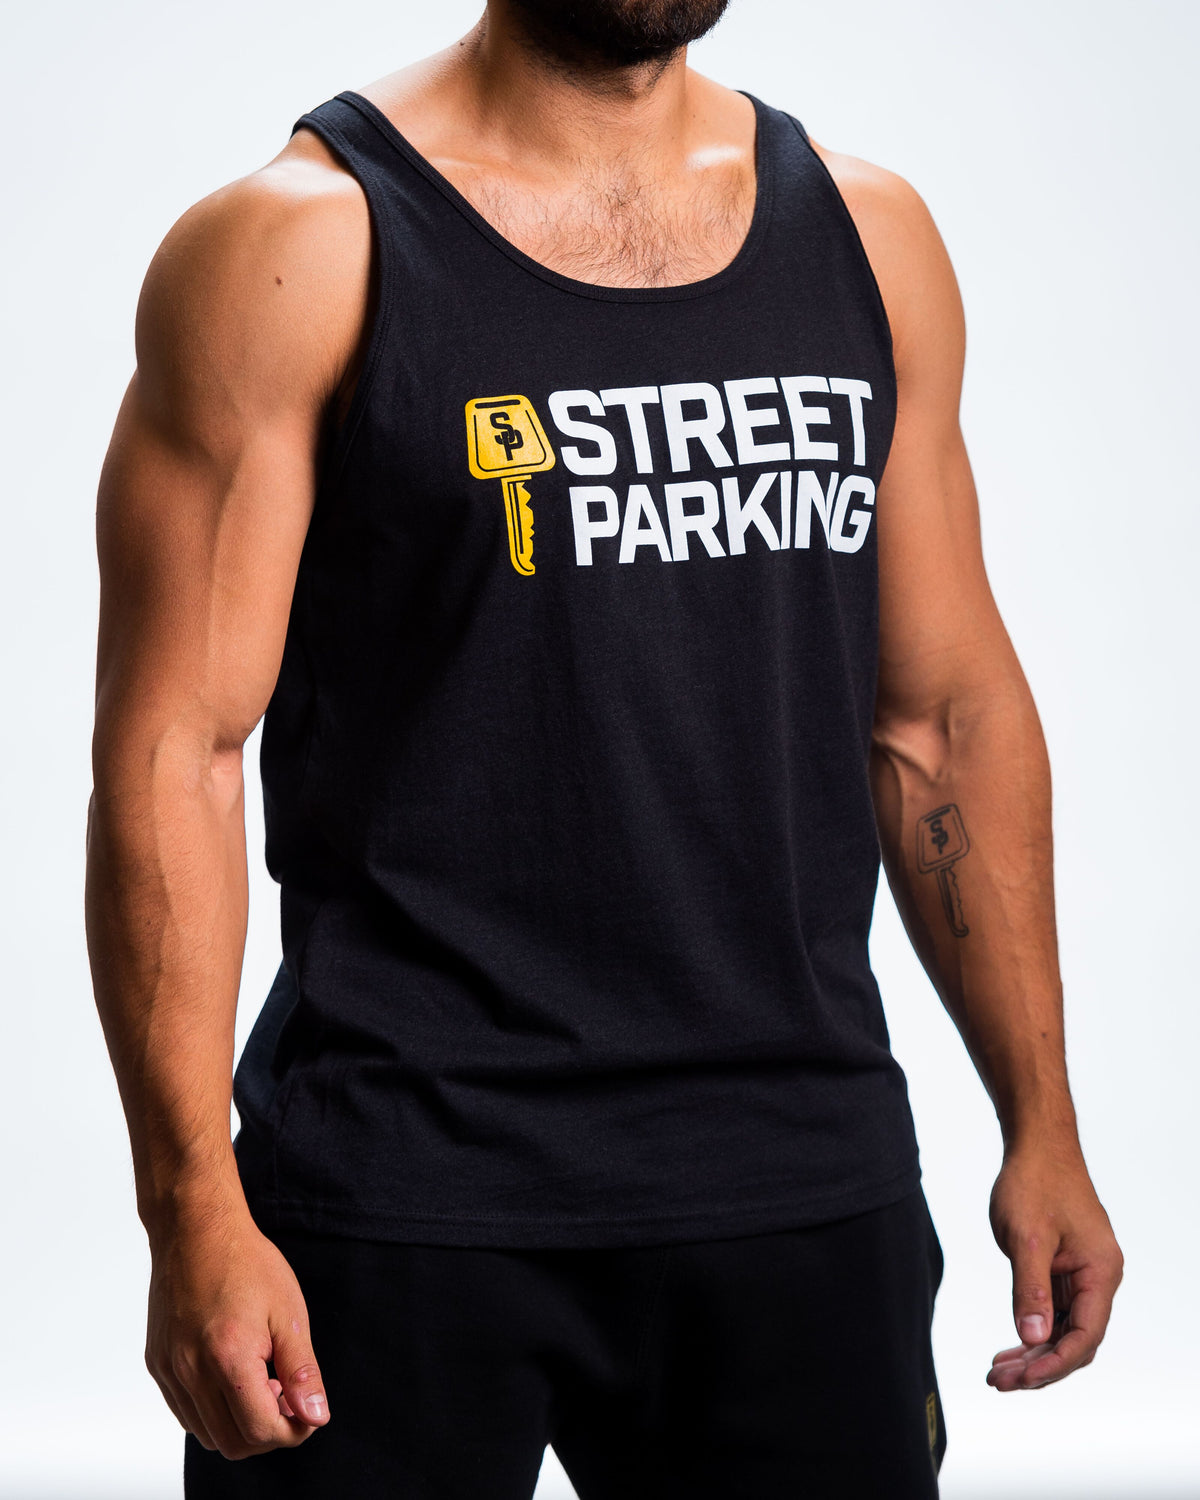 Street Parking Tank - Men's - Street Parking